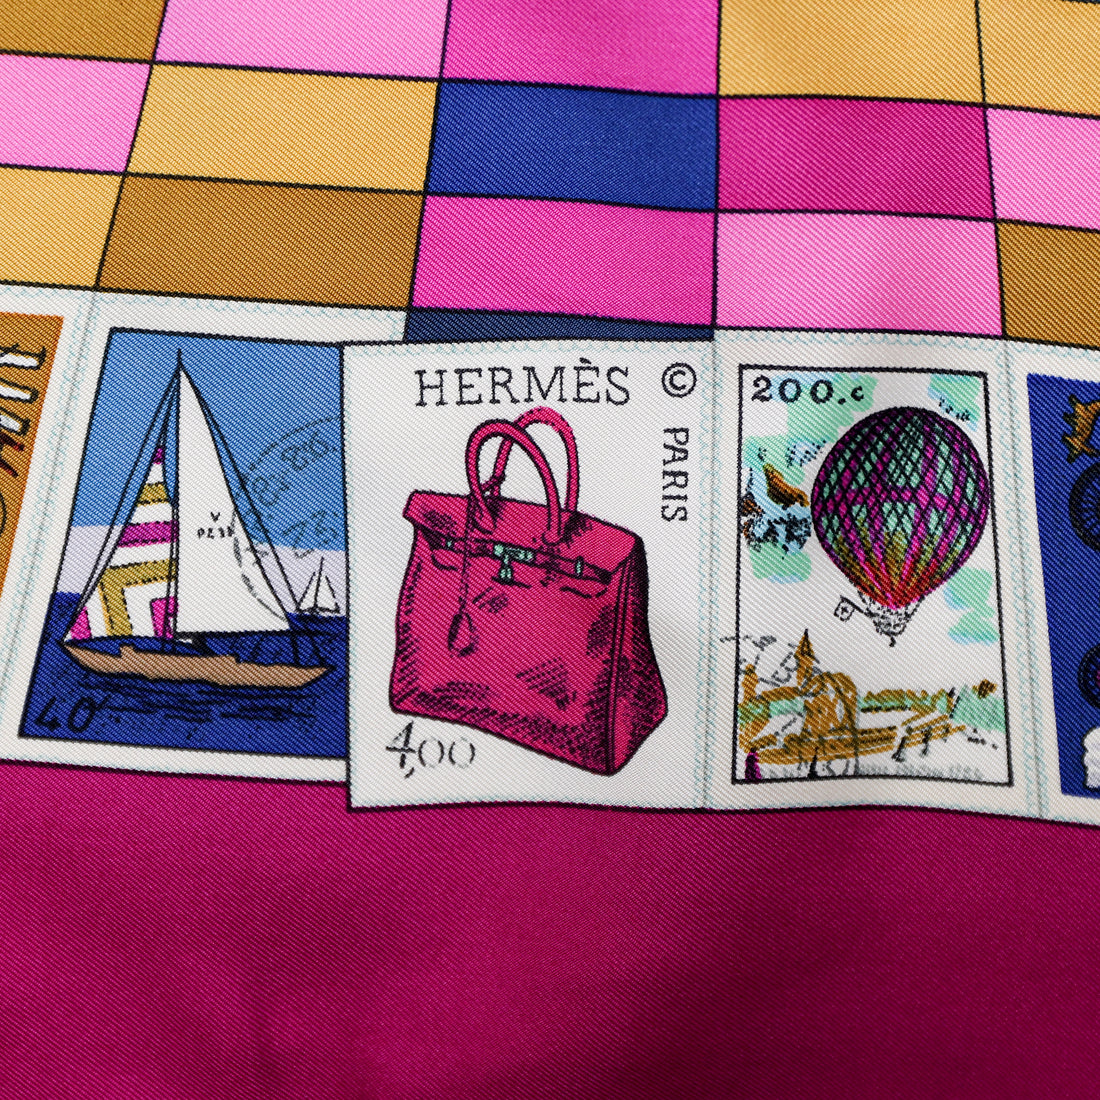 Hermès "Correspondance" silk scarf